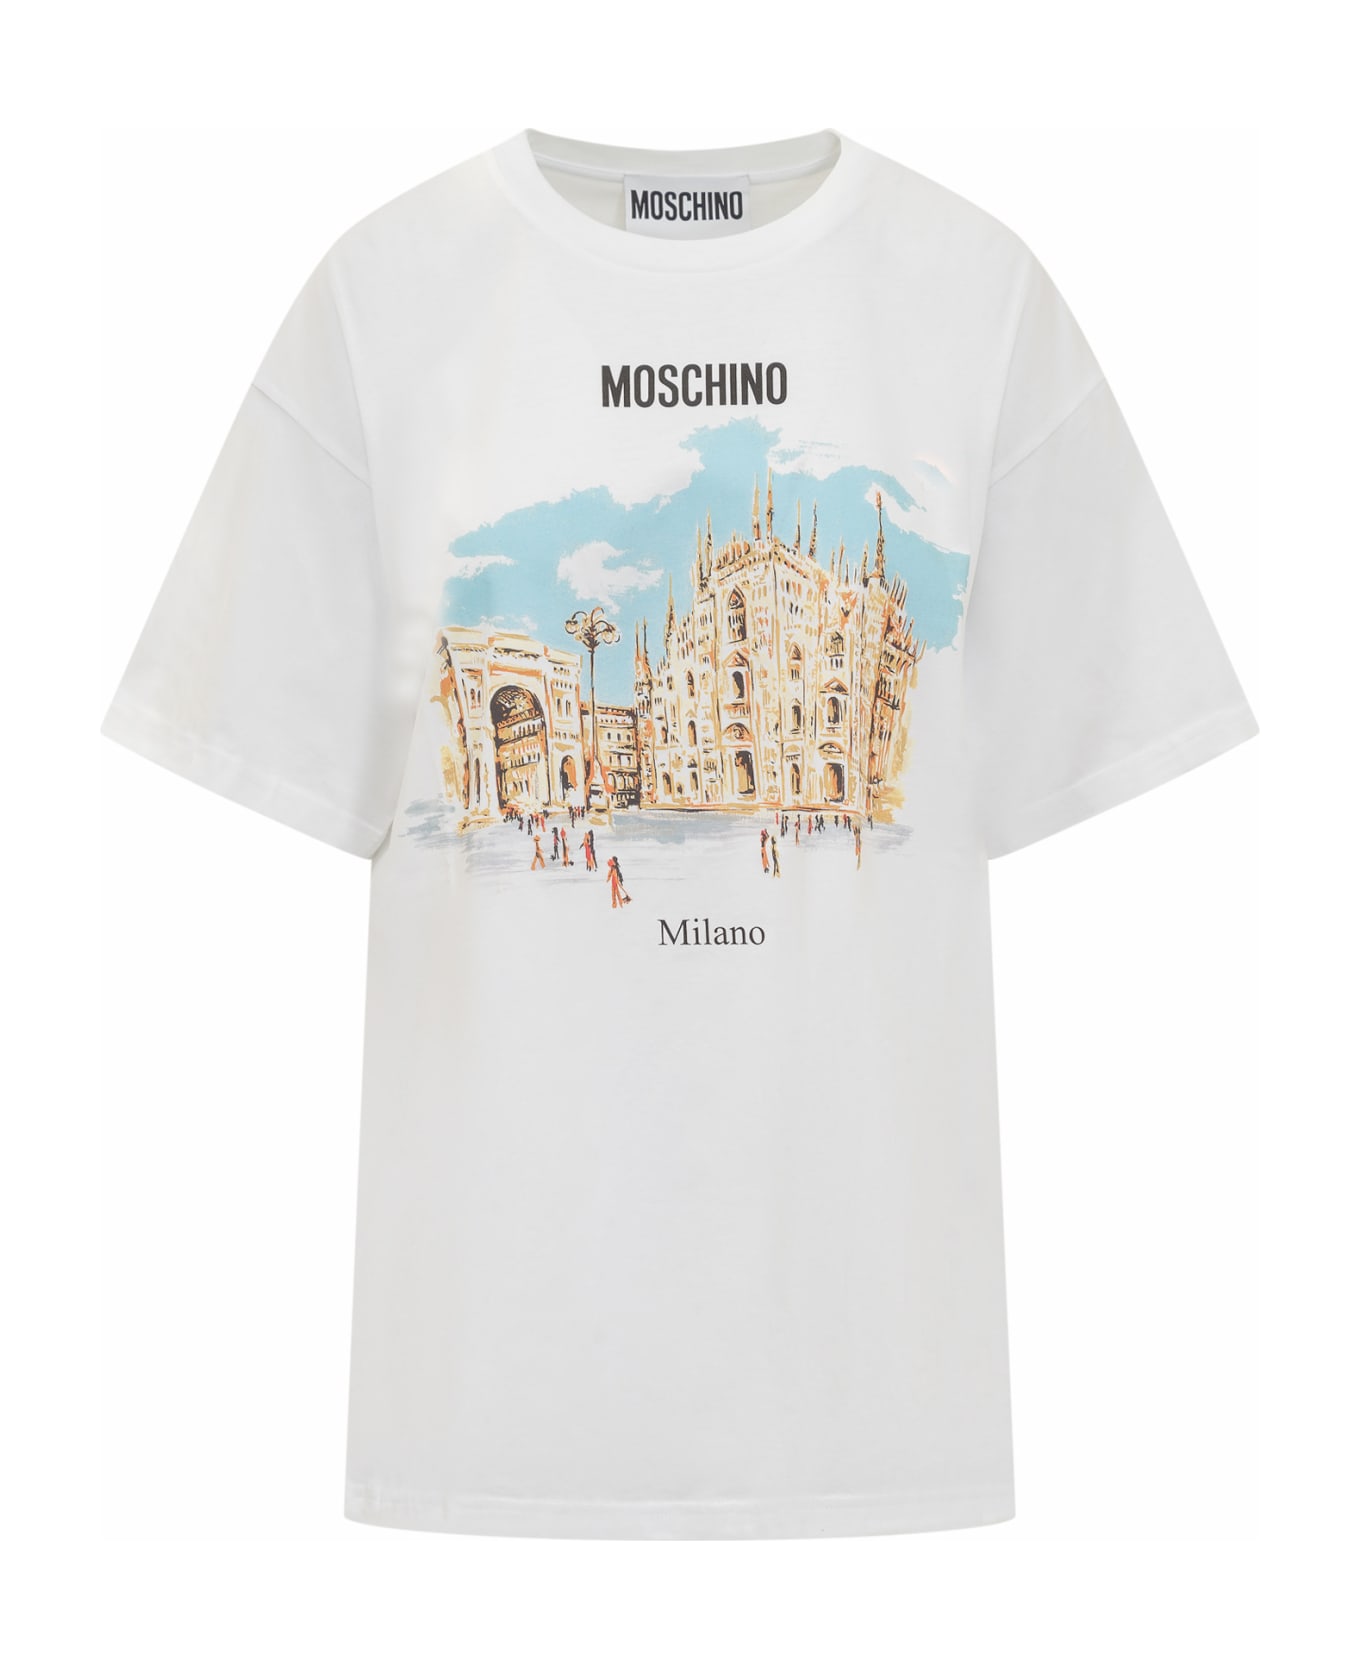 Moschino Archive T-shirt - FANTASIA BIANCO